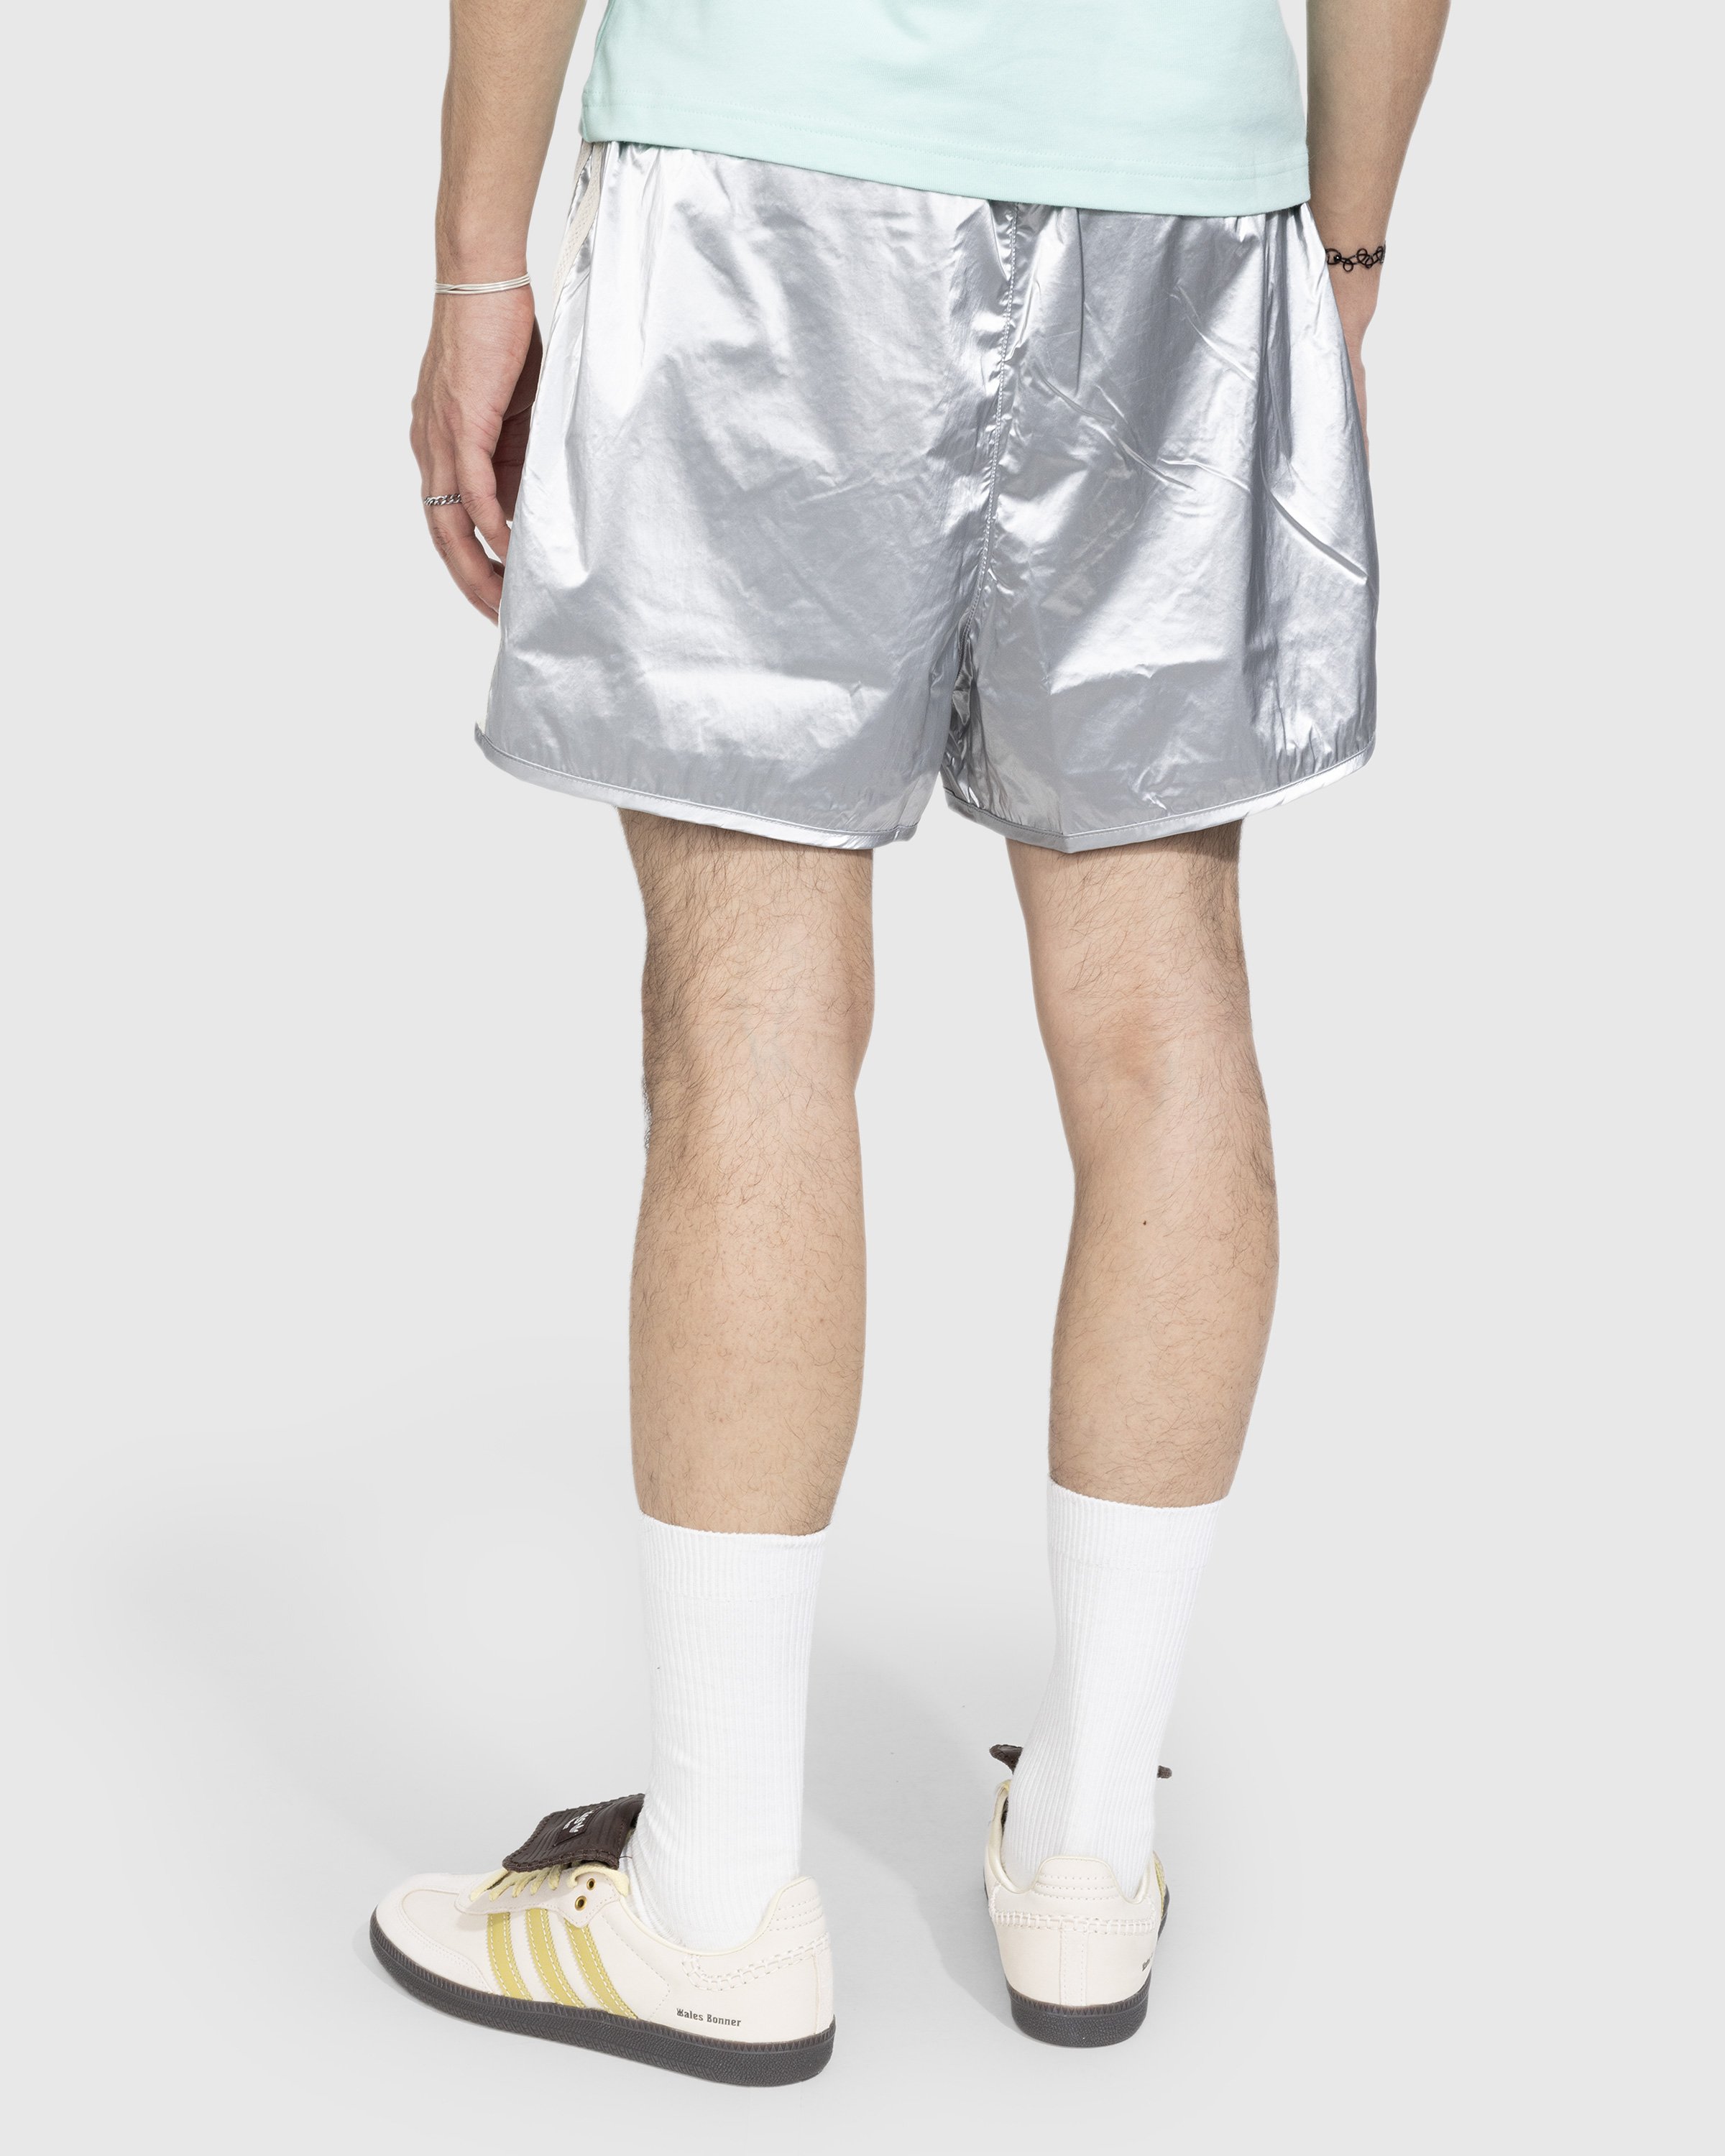 Adidas x Wales Bonner - Metallic Track Shorts Silver - Clothing - Silver - Image 3